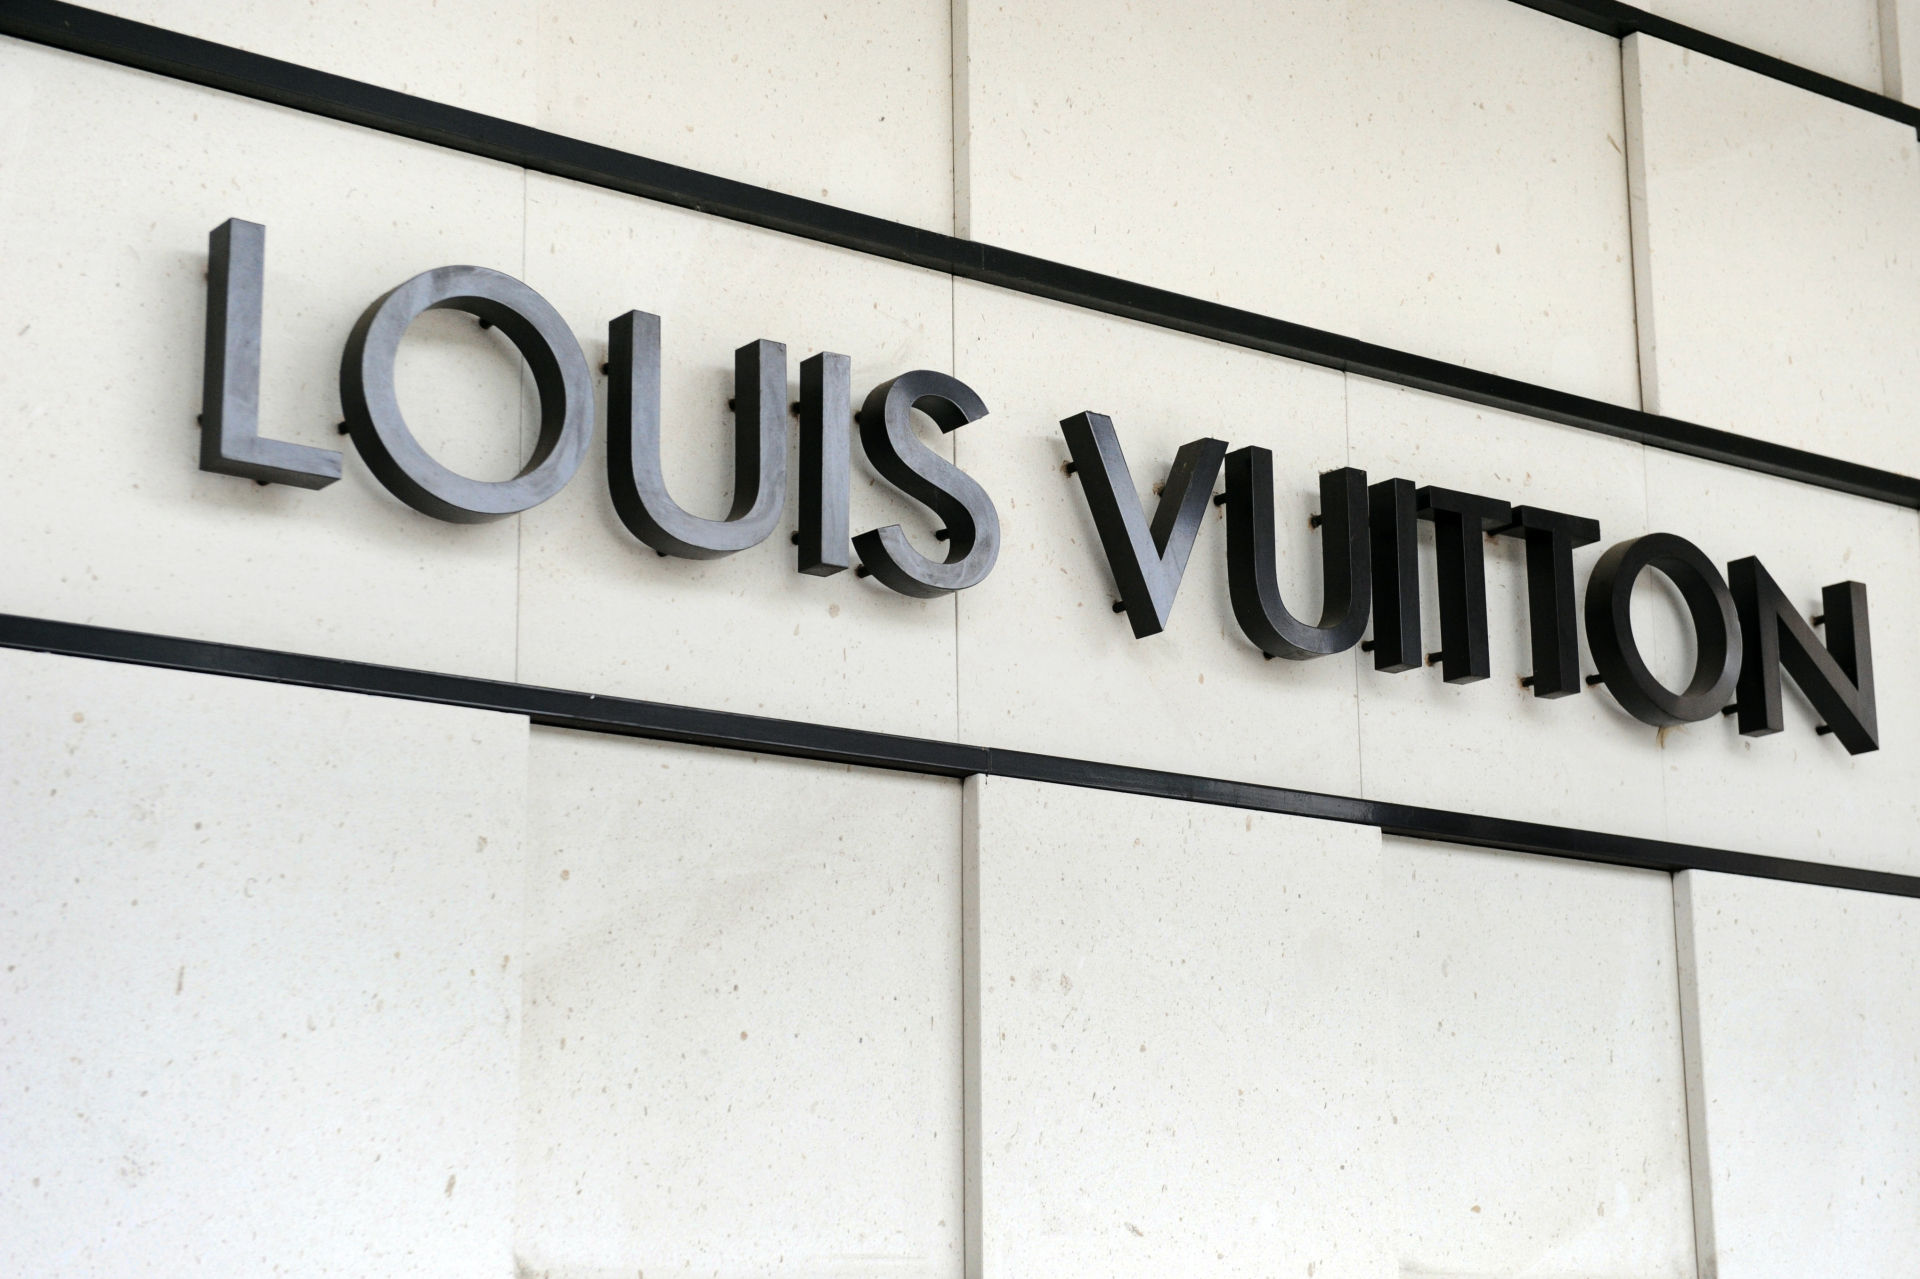 Louis Vuitton opens its first restaurant in Osaka - Club Journal